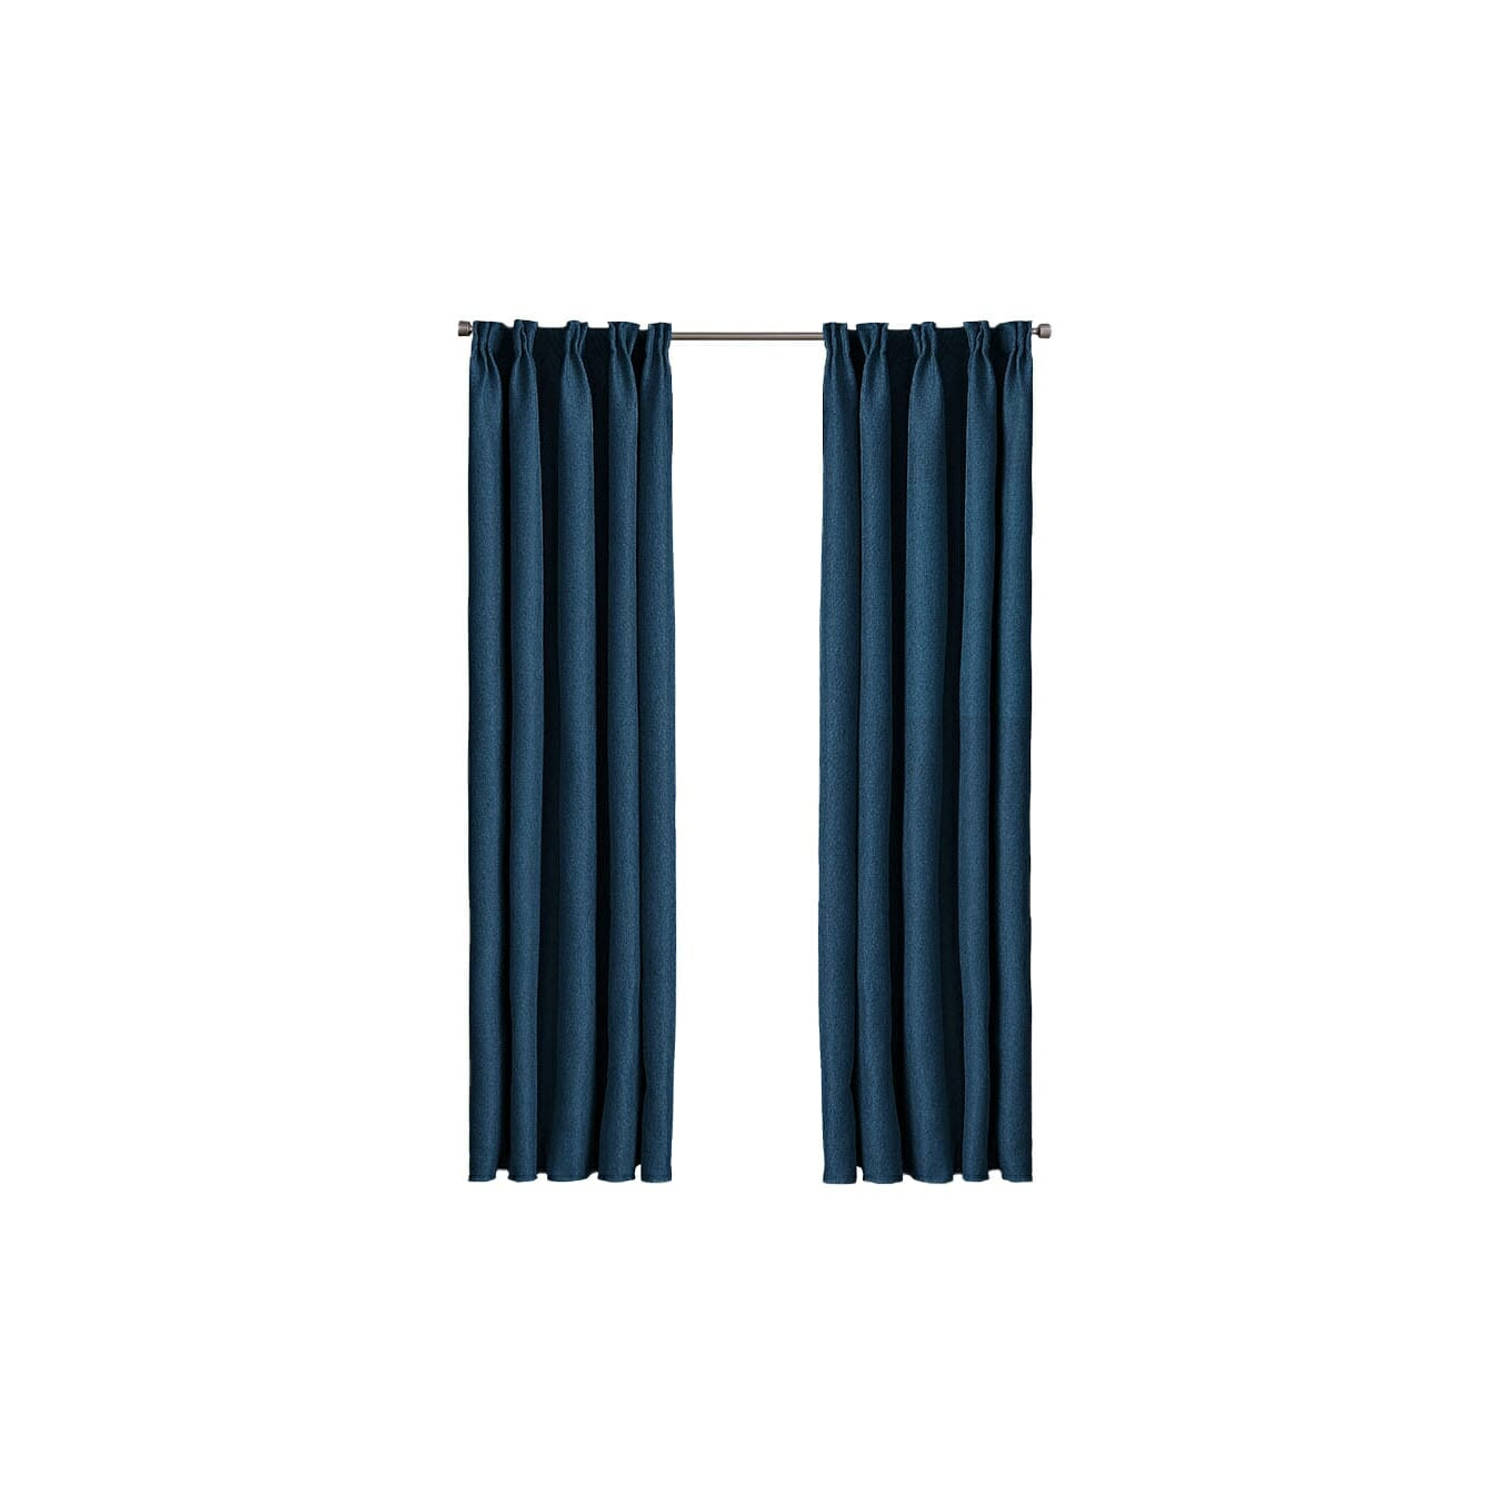 Larson Premium - Premium gordijn - Luxury home edition - Met haken - 1.5m x 2.7m - Donkerblauw